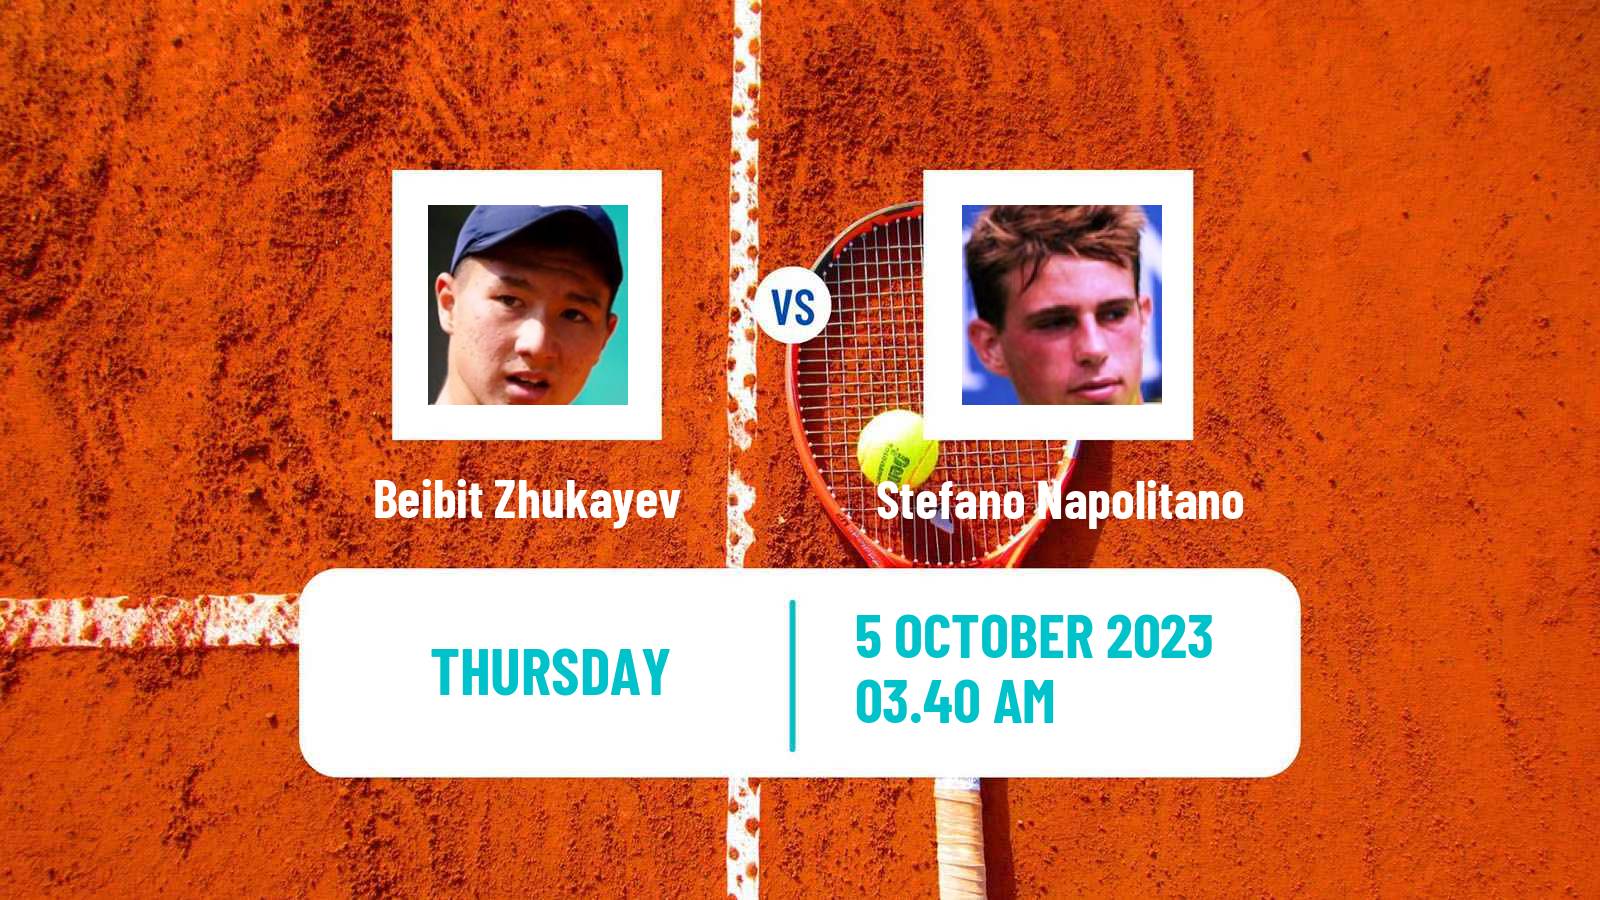 Tennis ATP Shanghai Beibit Zhukayev - Stefano Napolitano